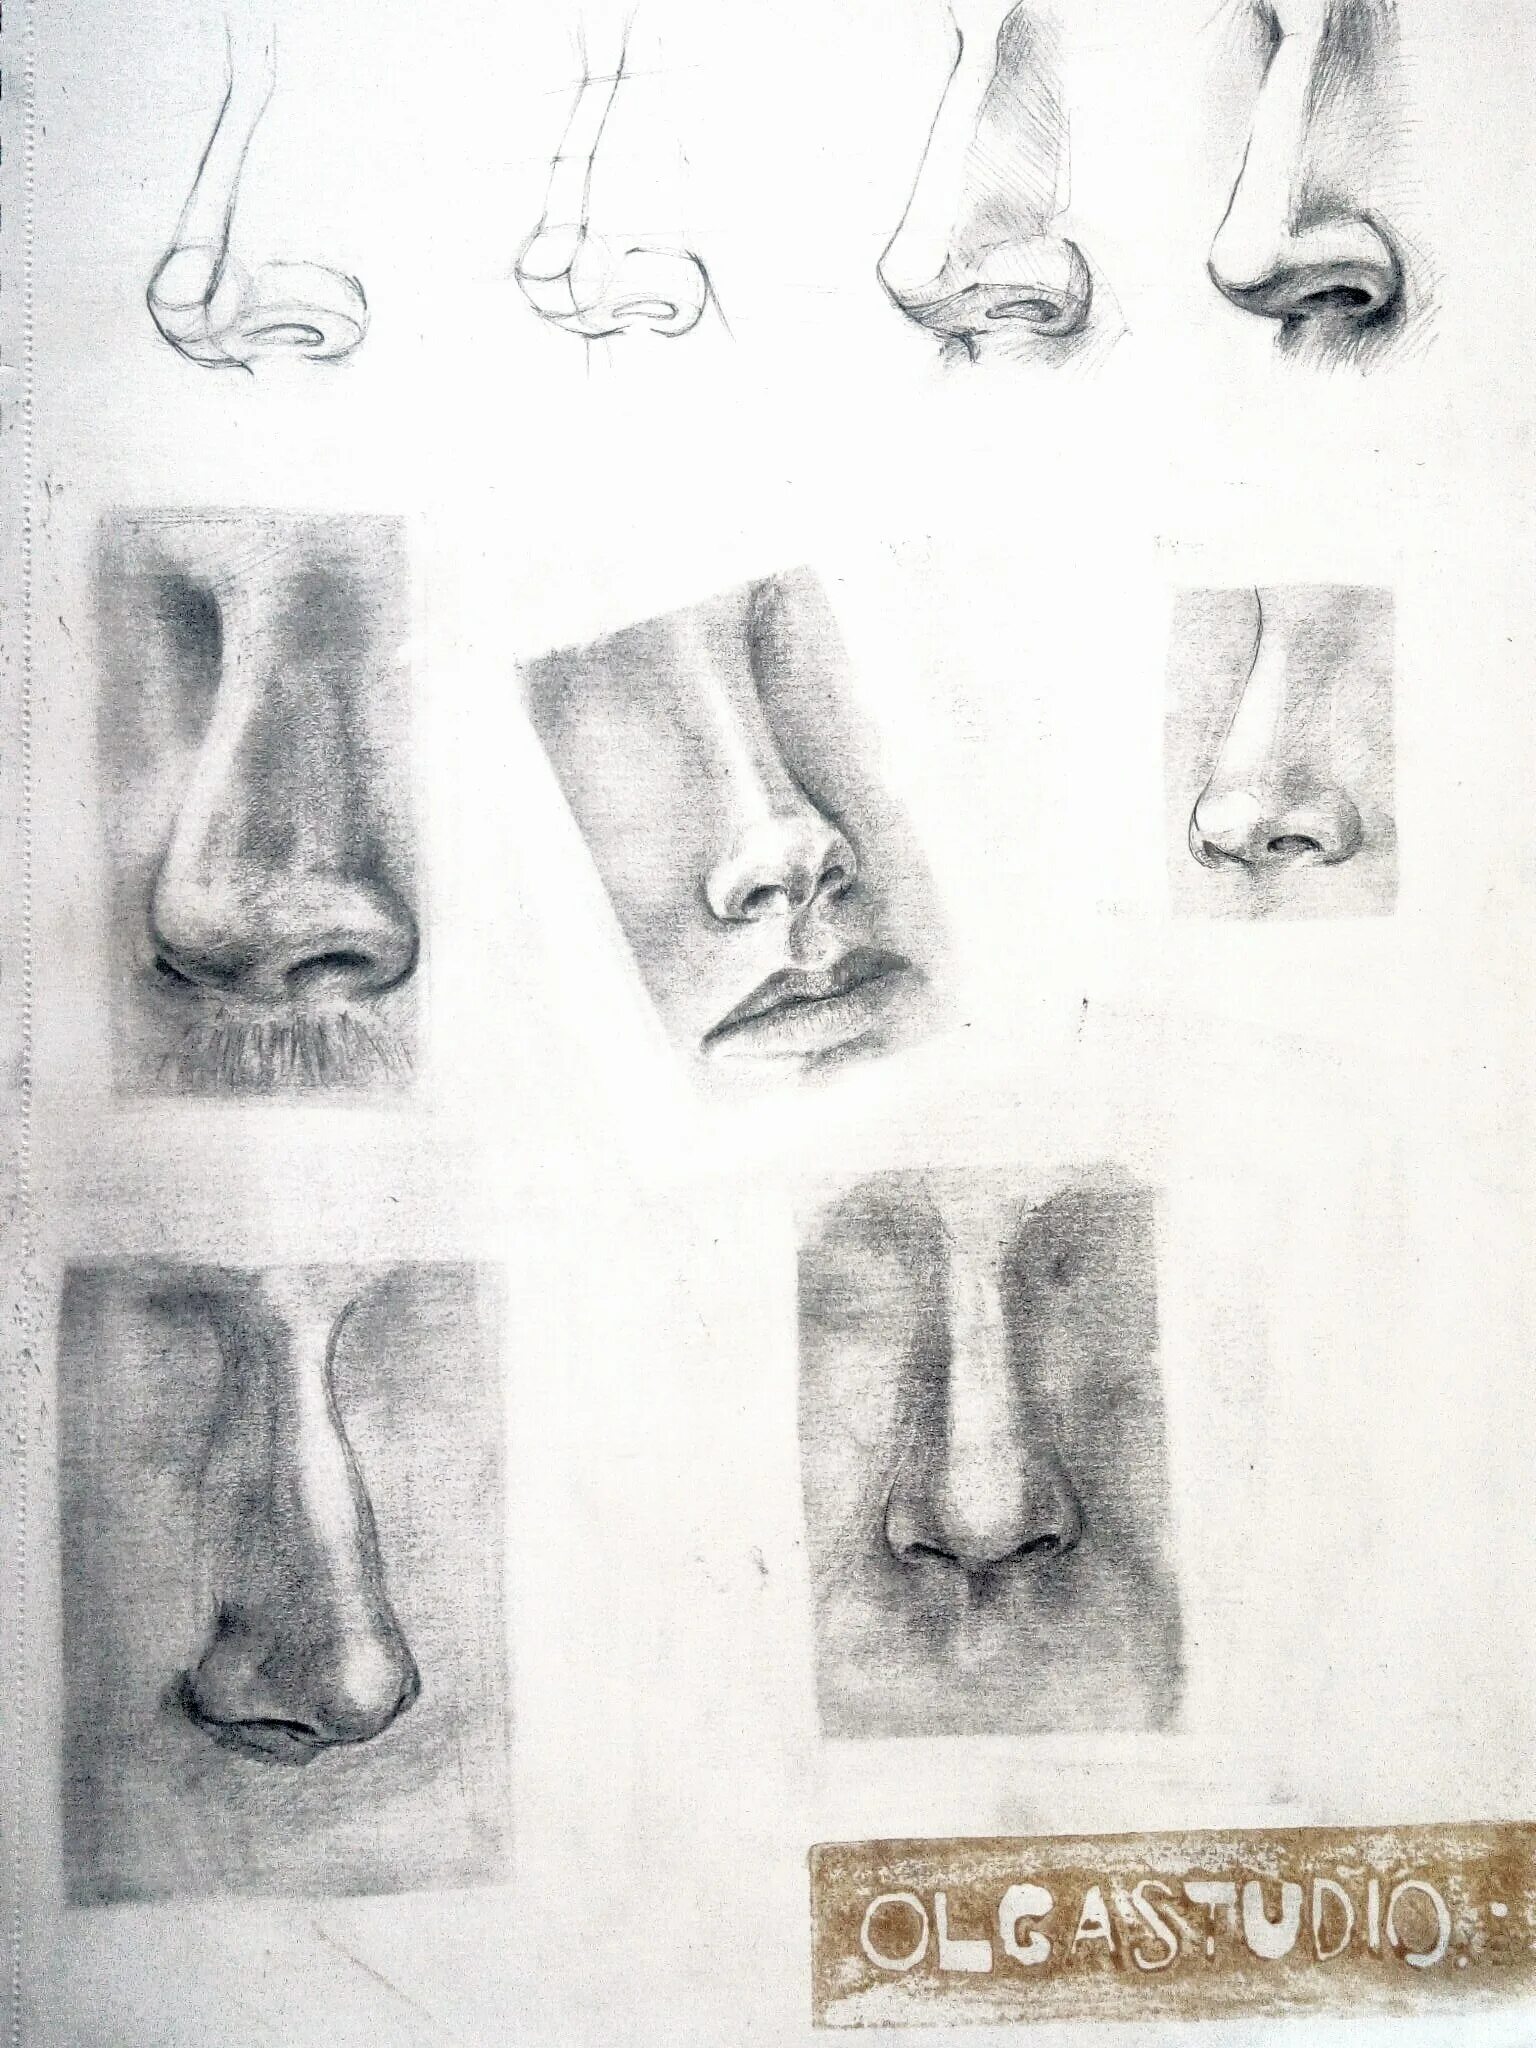 Баммес пластическая анатомия носа. Готфрид Баммес нос. Готфрид Баммес анатомия носа. Академический нос Давида Баммес.